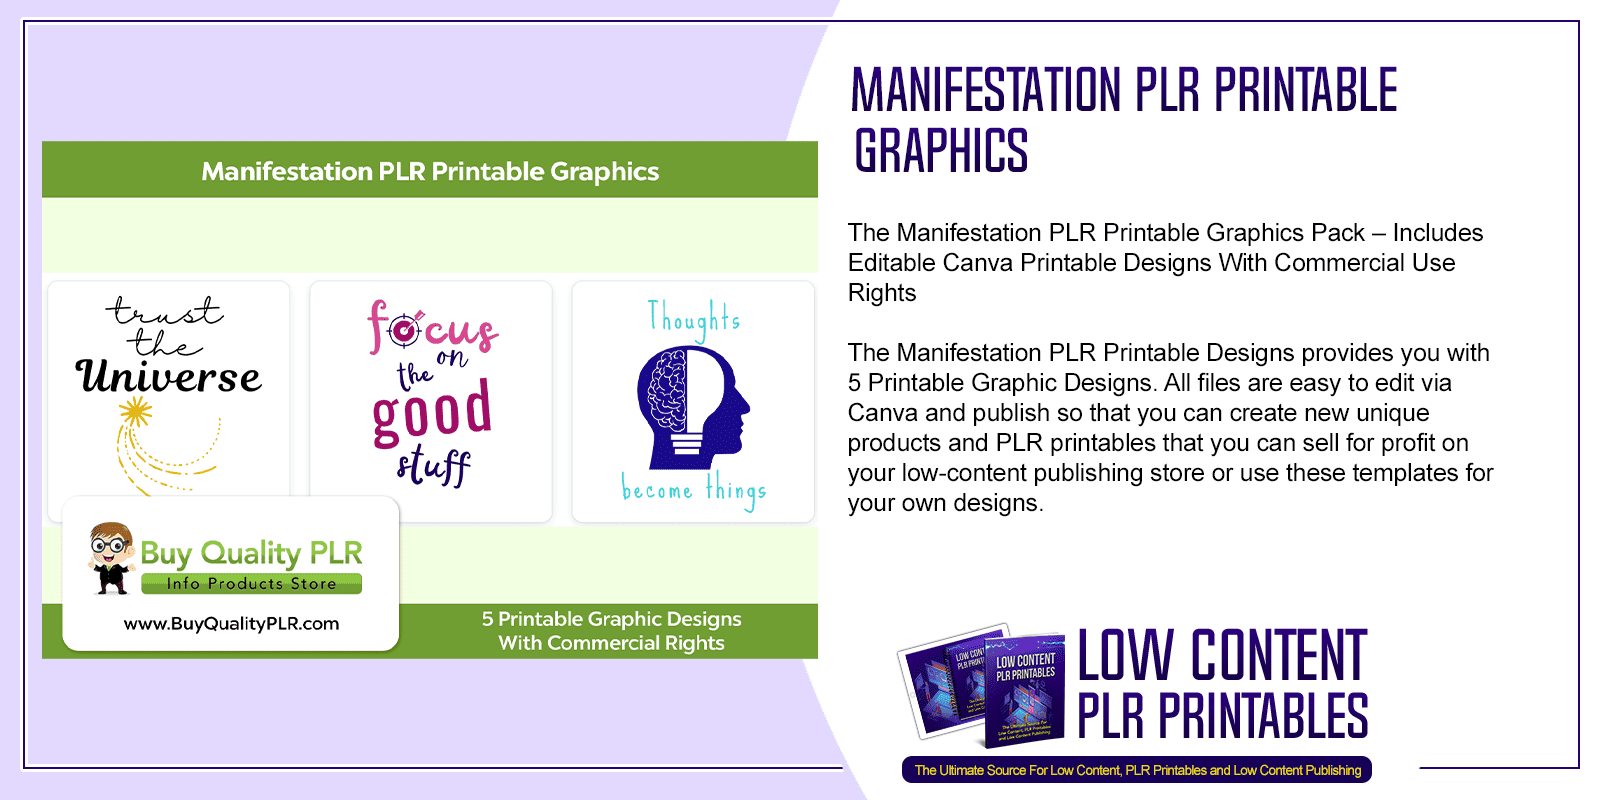 Manifestation PLR Printable Graphics